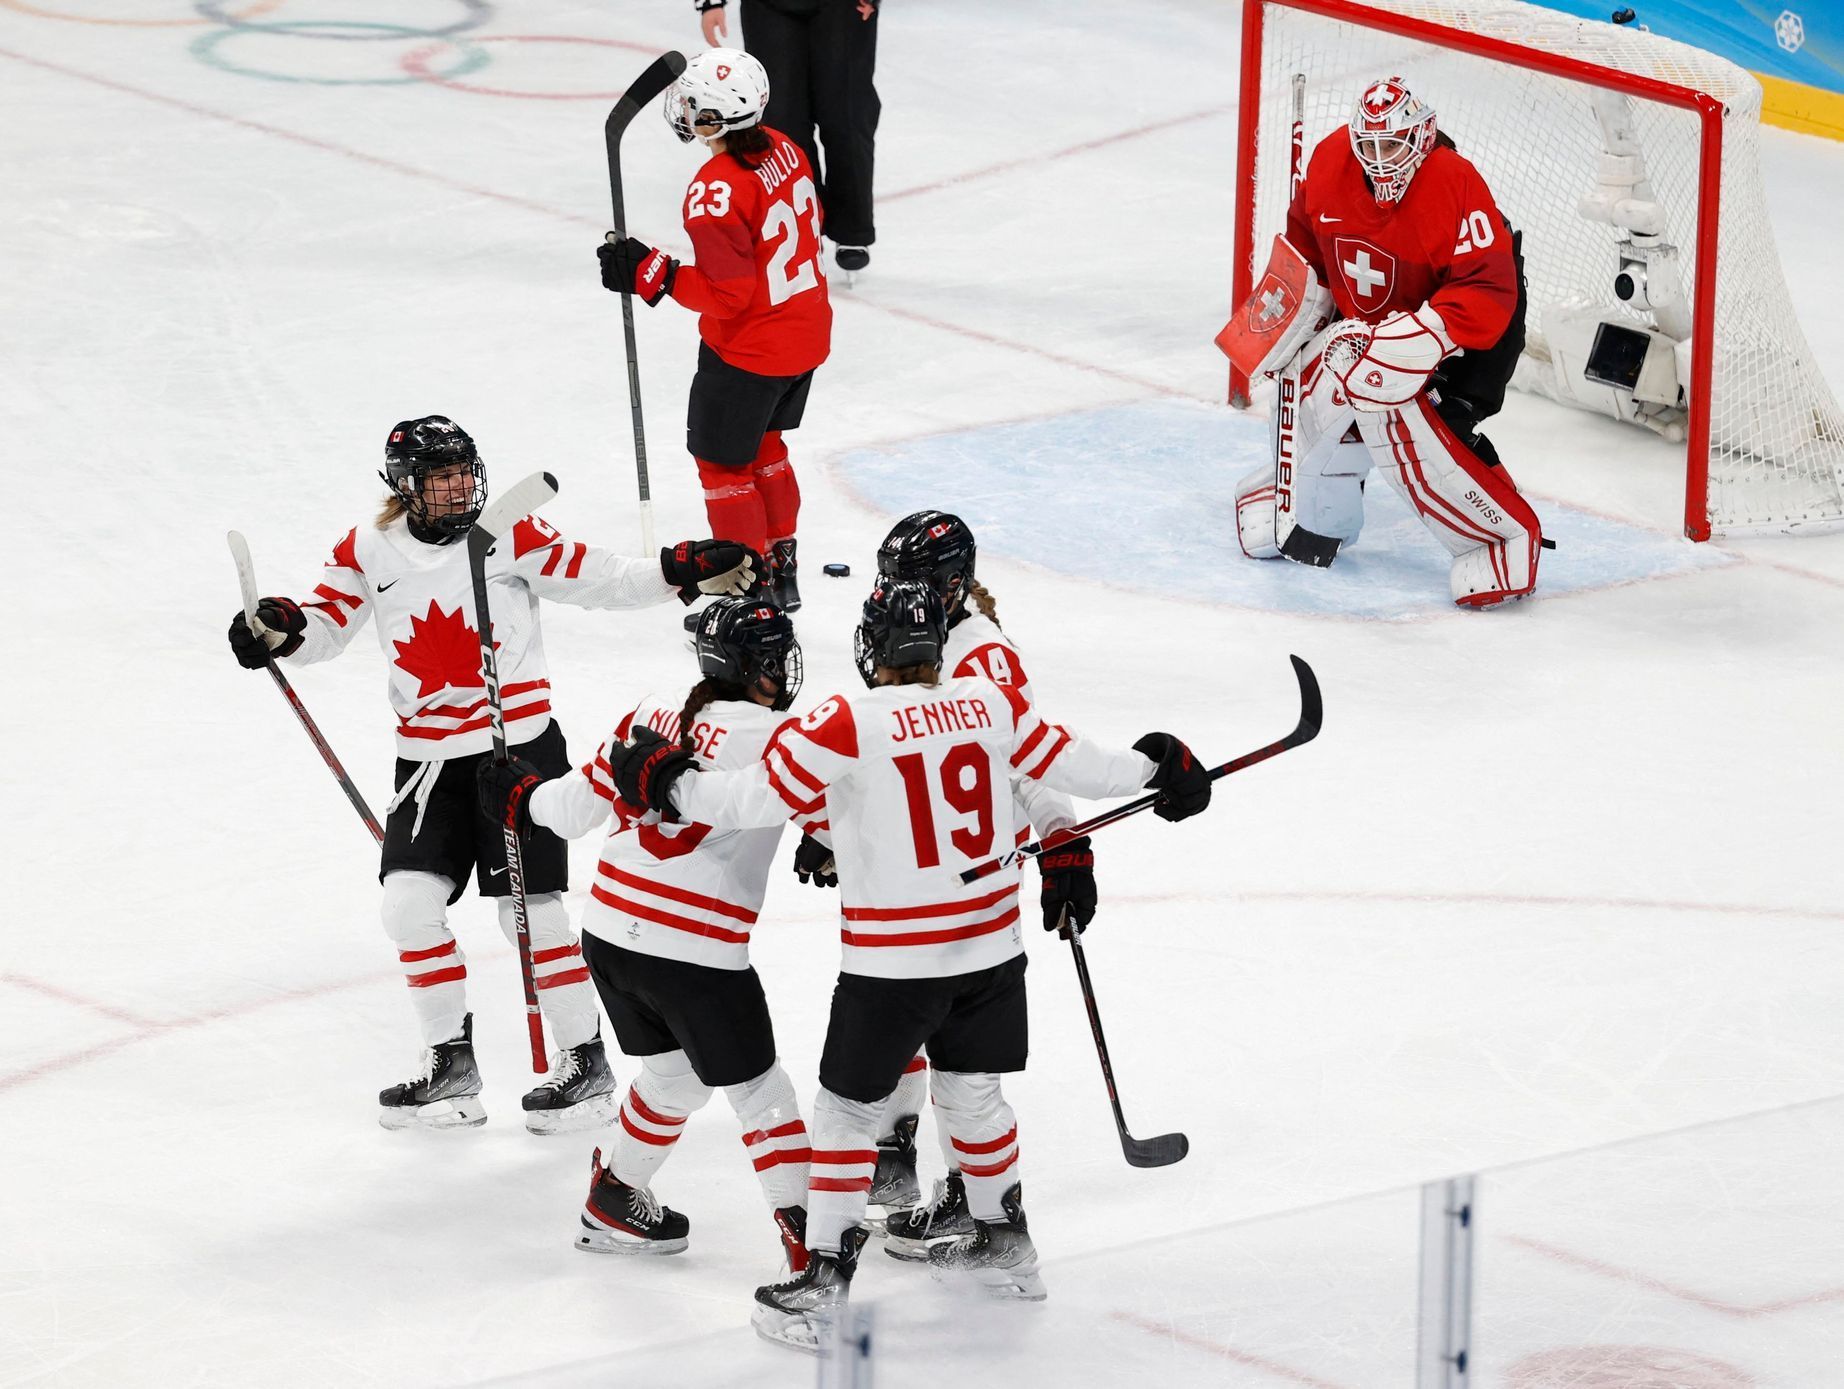 Ice Hockey - Women's Play-offs Semifinals - Canada v Switzerland